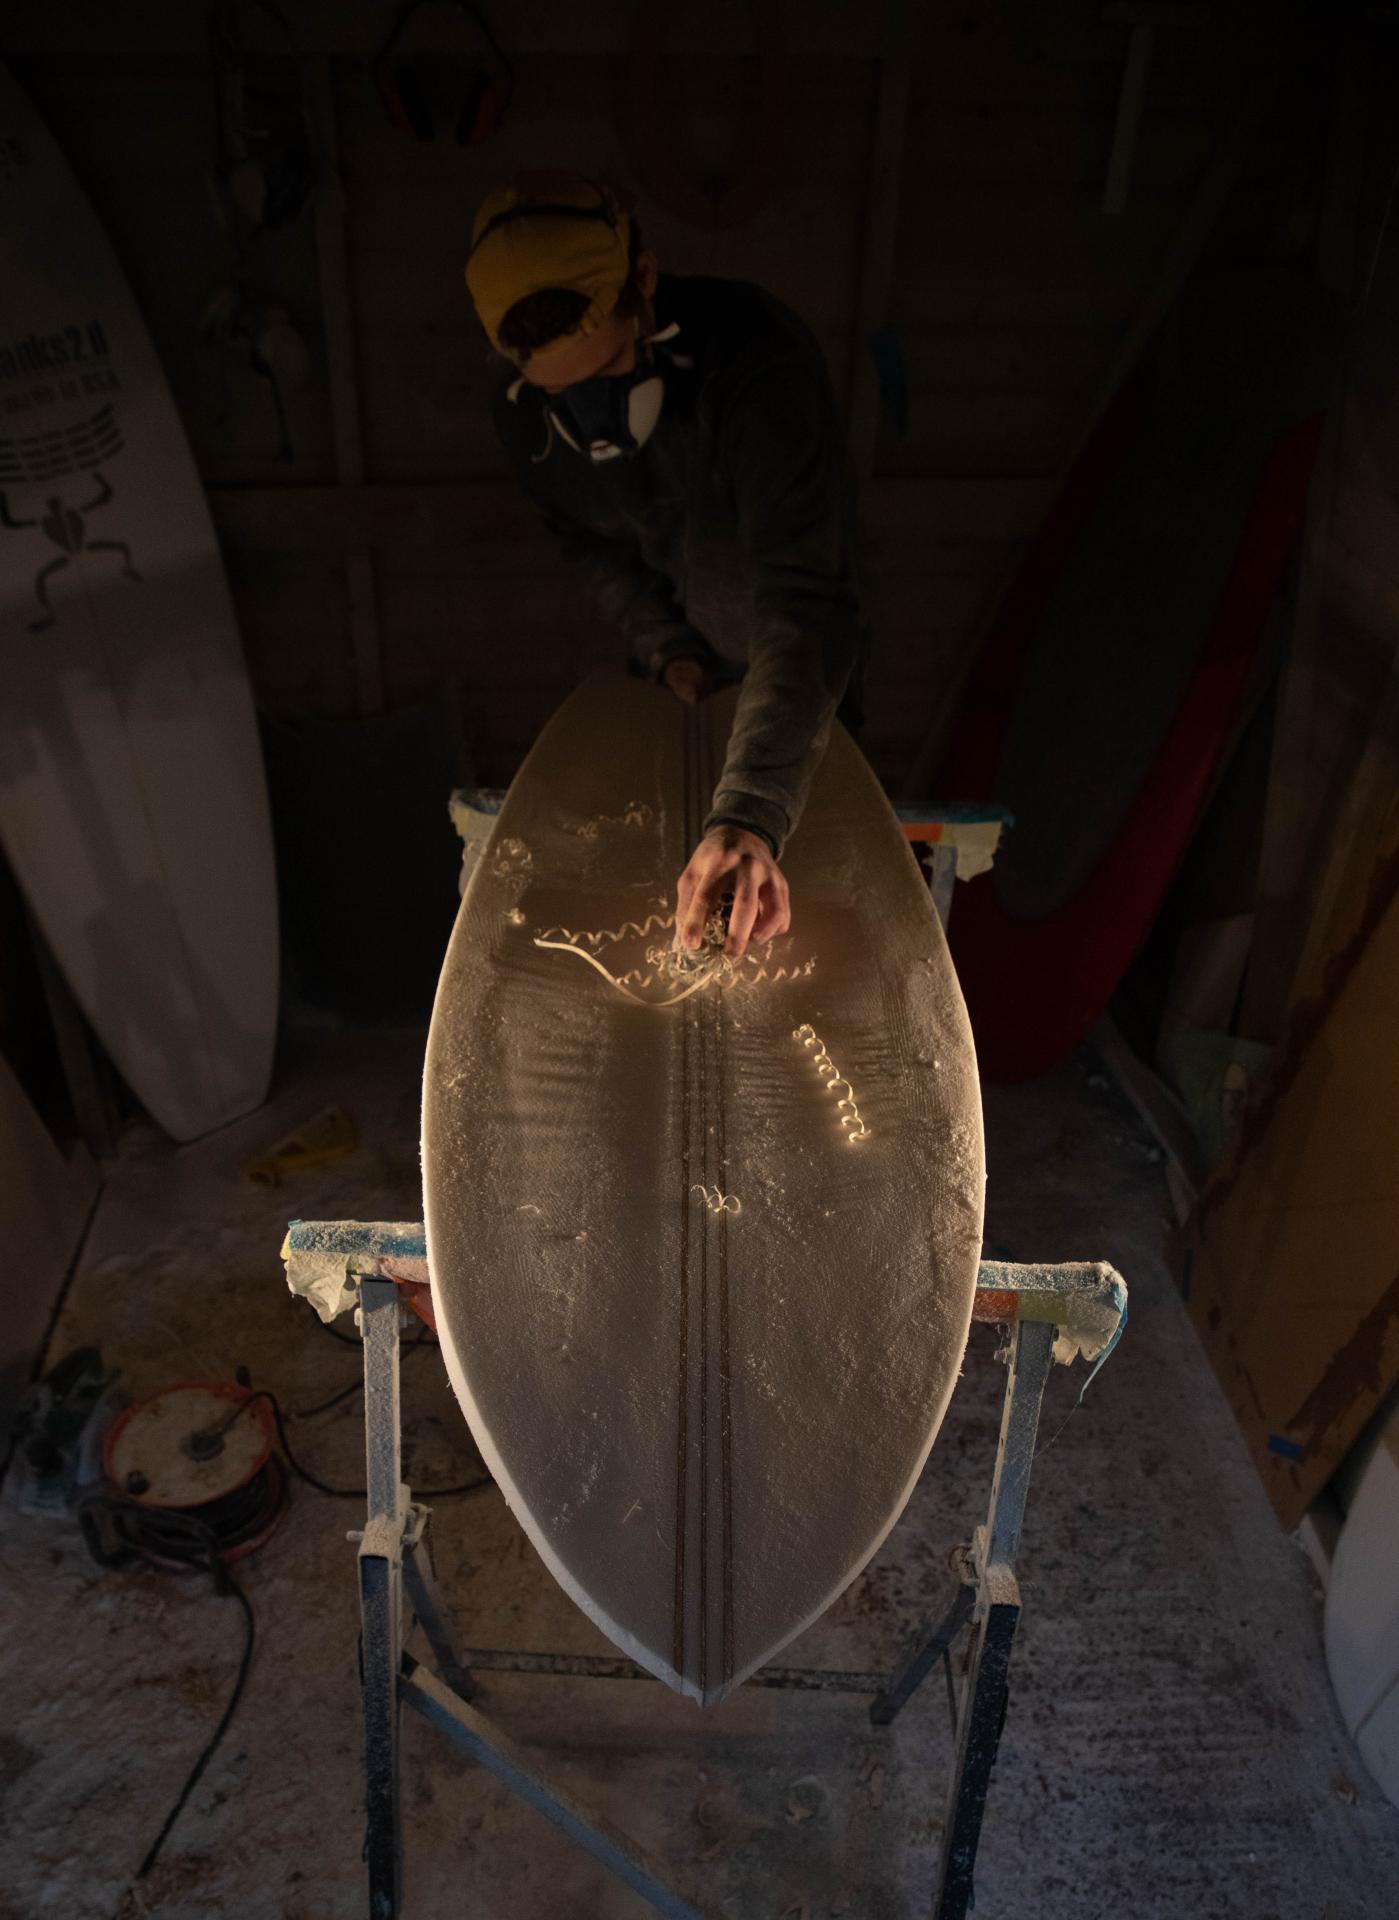 New York Photography Awards Winner - Seaweed Surfboard Shaper